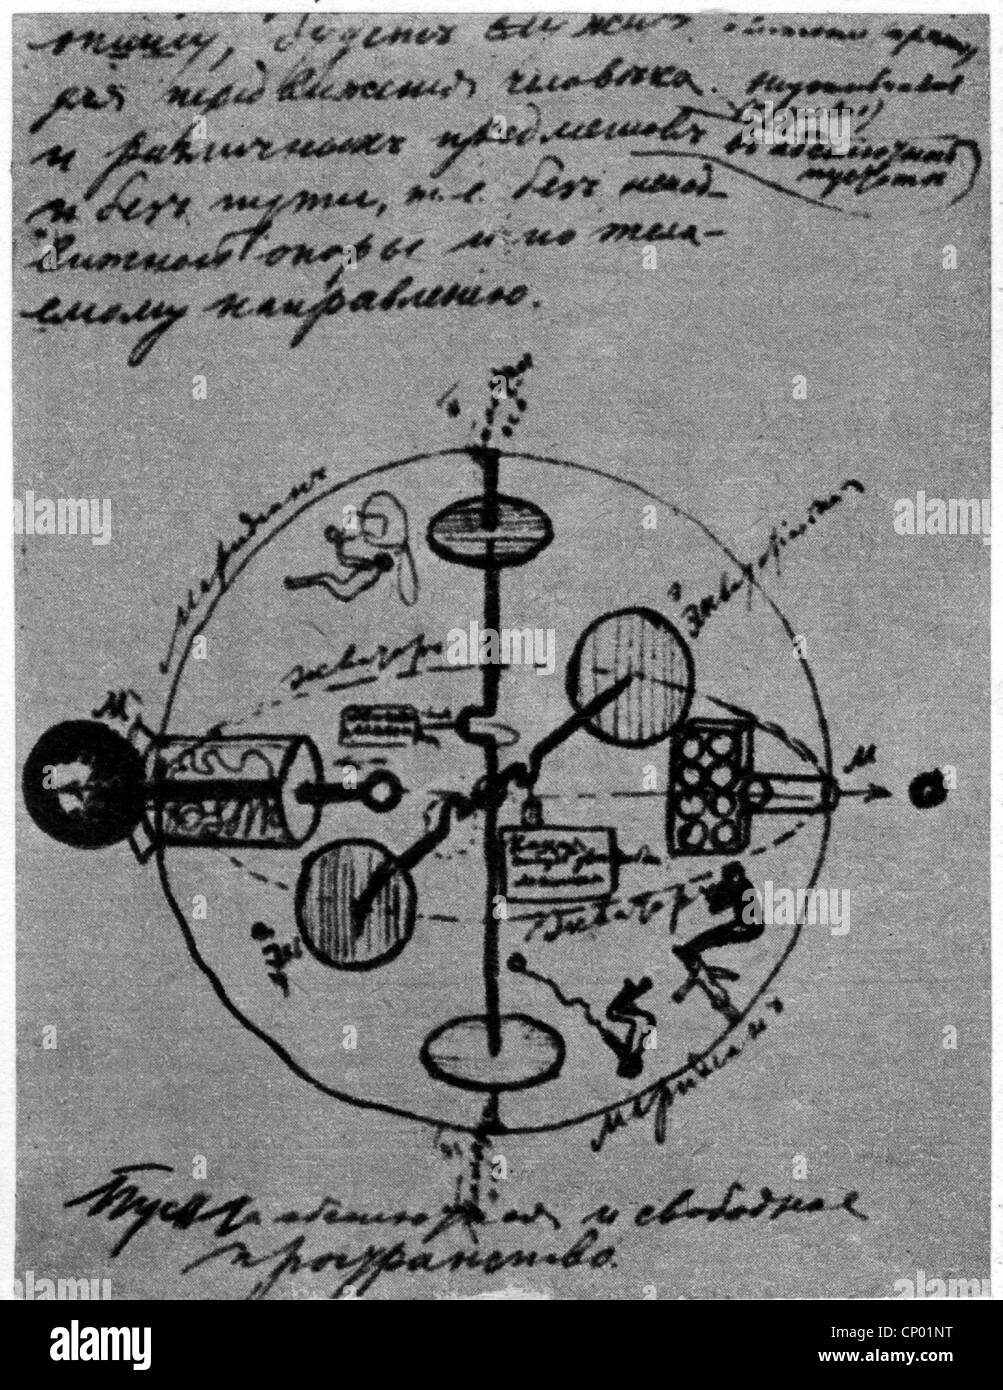 Tsiolkovskii, Konstantin Eduardovich, 17.9.1857 - 19.9.1935, Russian physicist, mathematician, sketch showing a spacecraft, Stock Photo